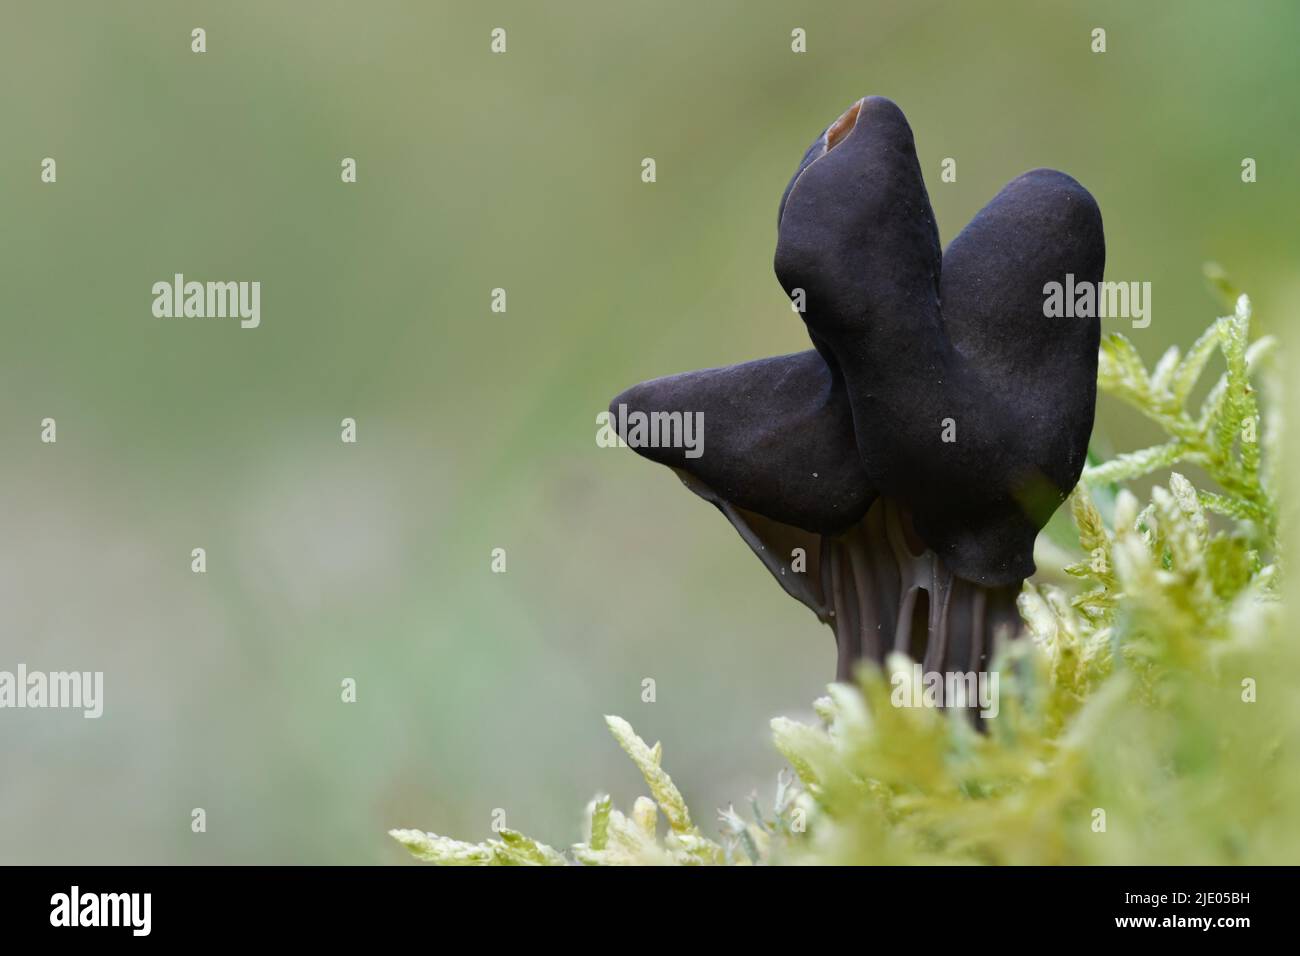 Slate Grey Saddle (Helvella lacunosa), fruiting body between moss, Brachter Wald, North Rhine-Westphalia, Germany Stock Photo